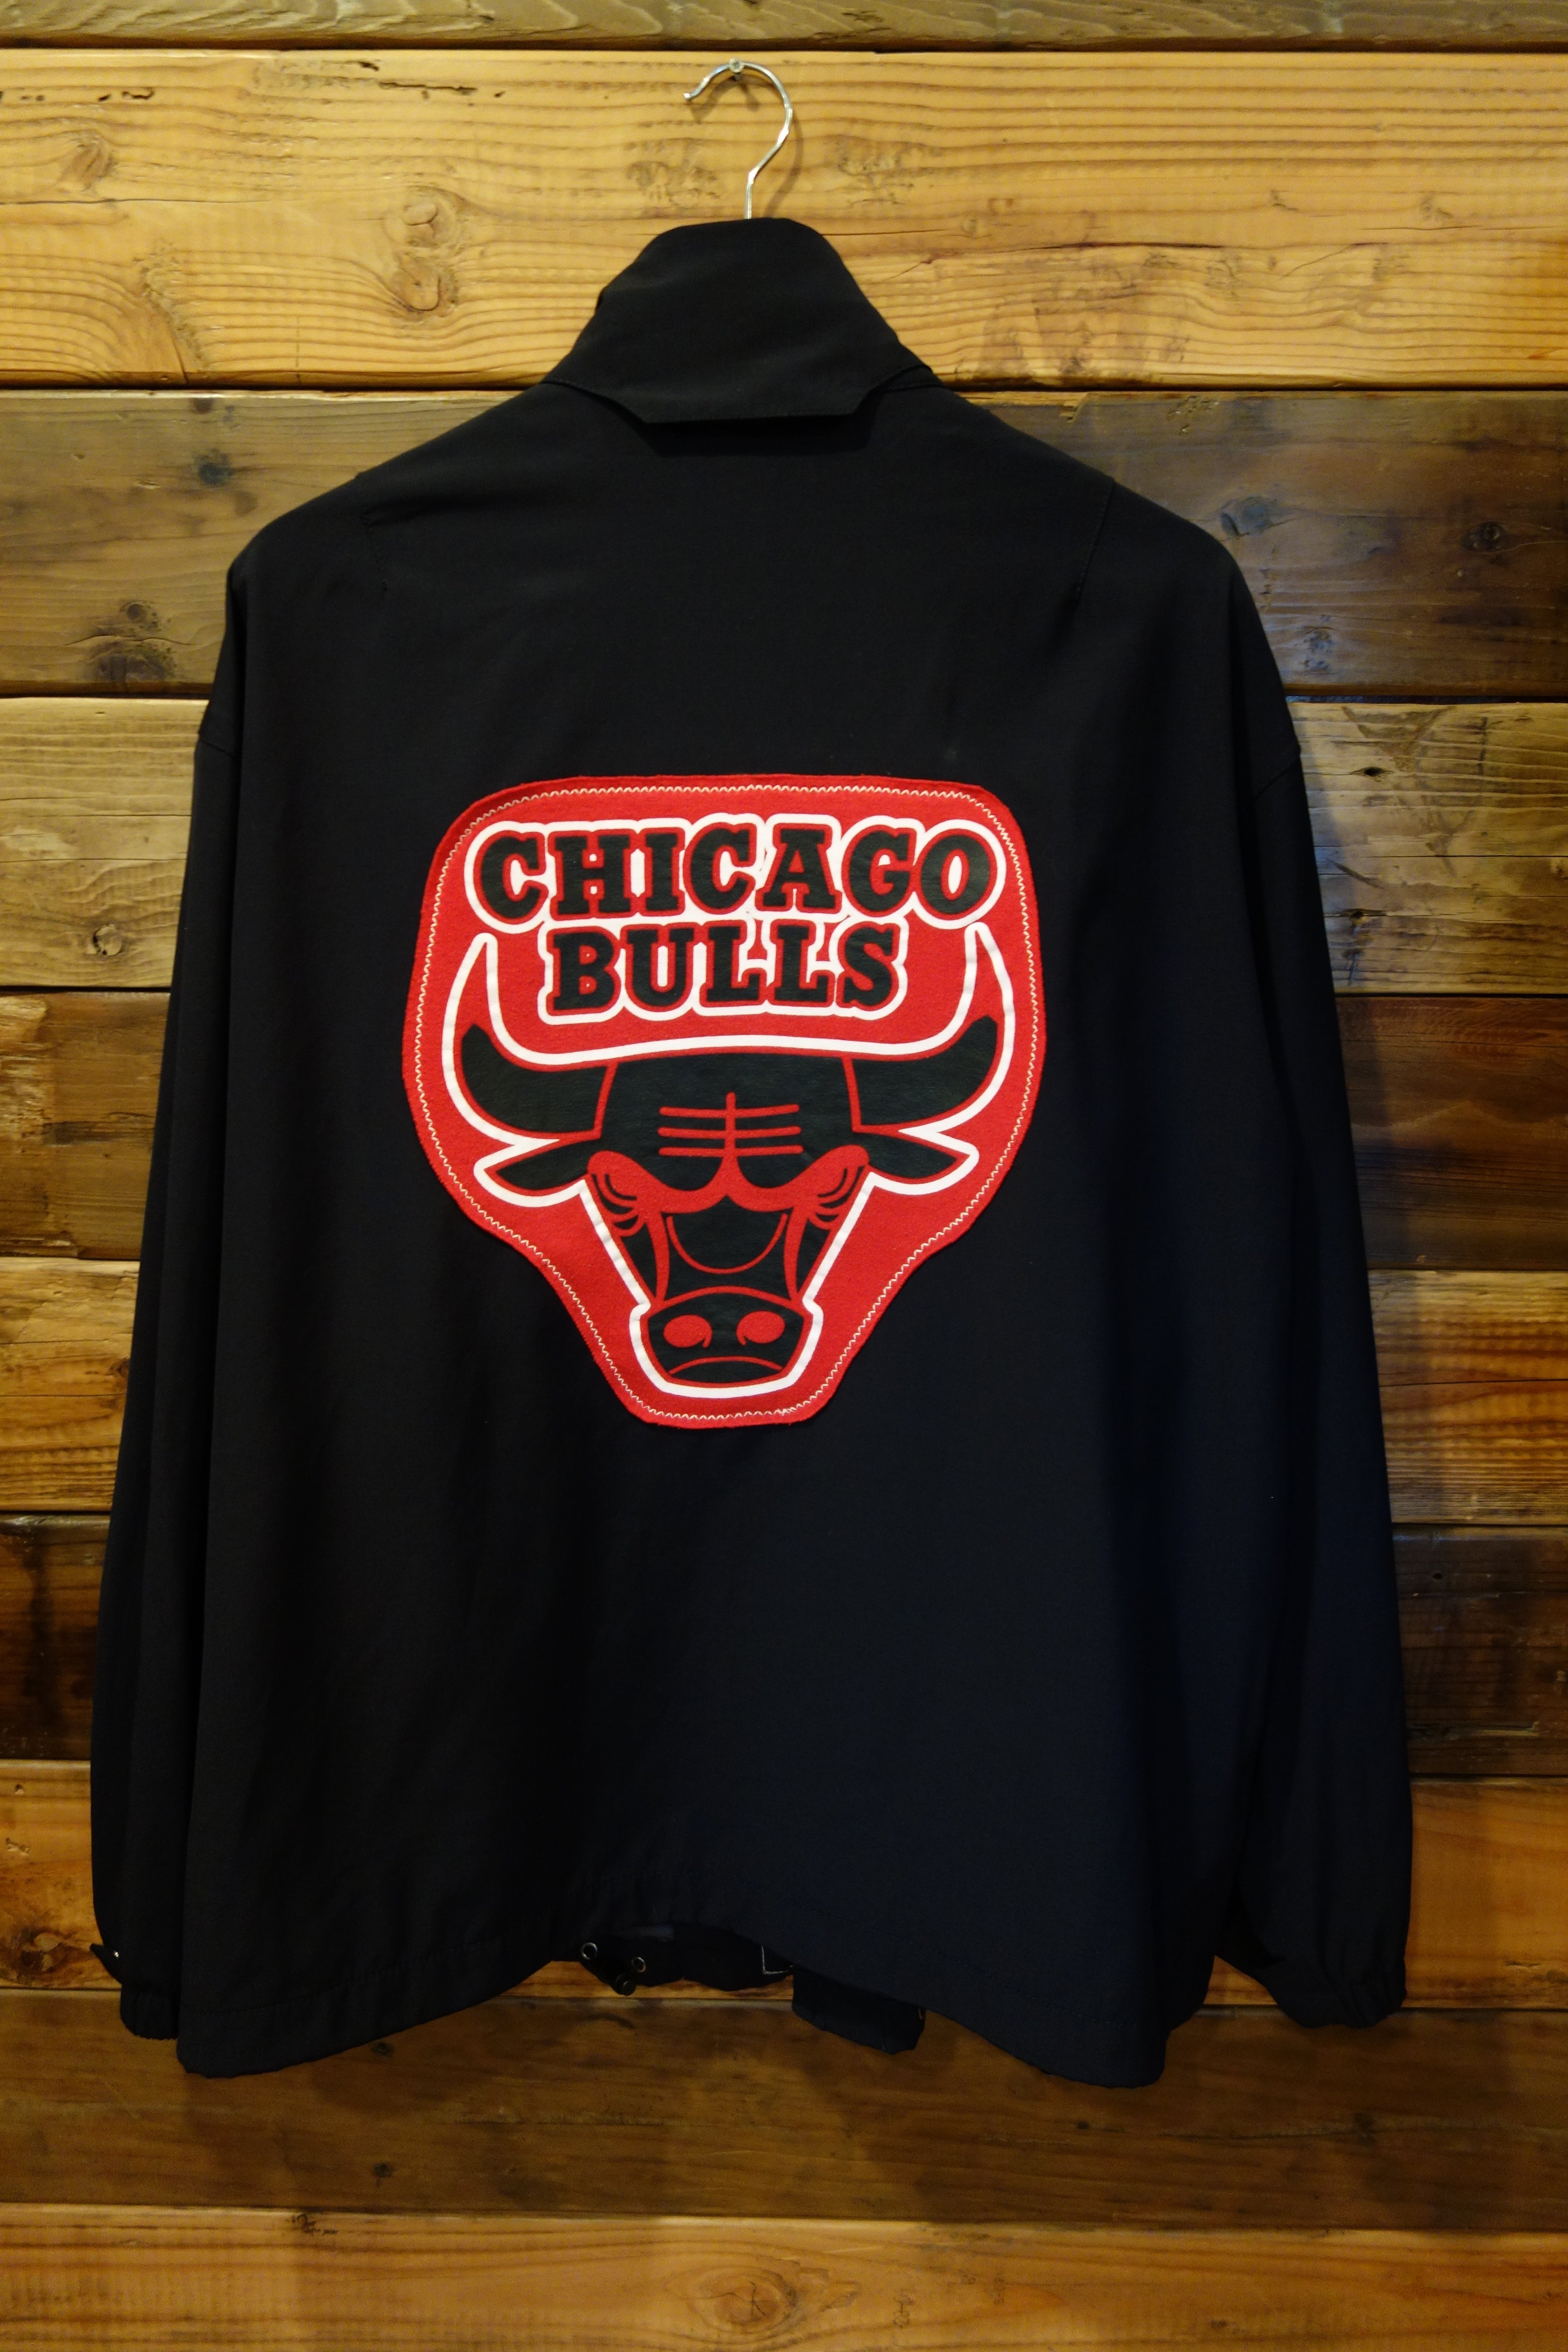 Chicago Bulls one of a kind Giorgio Armani black jacket 